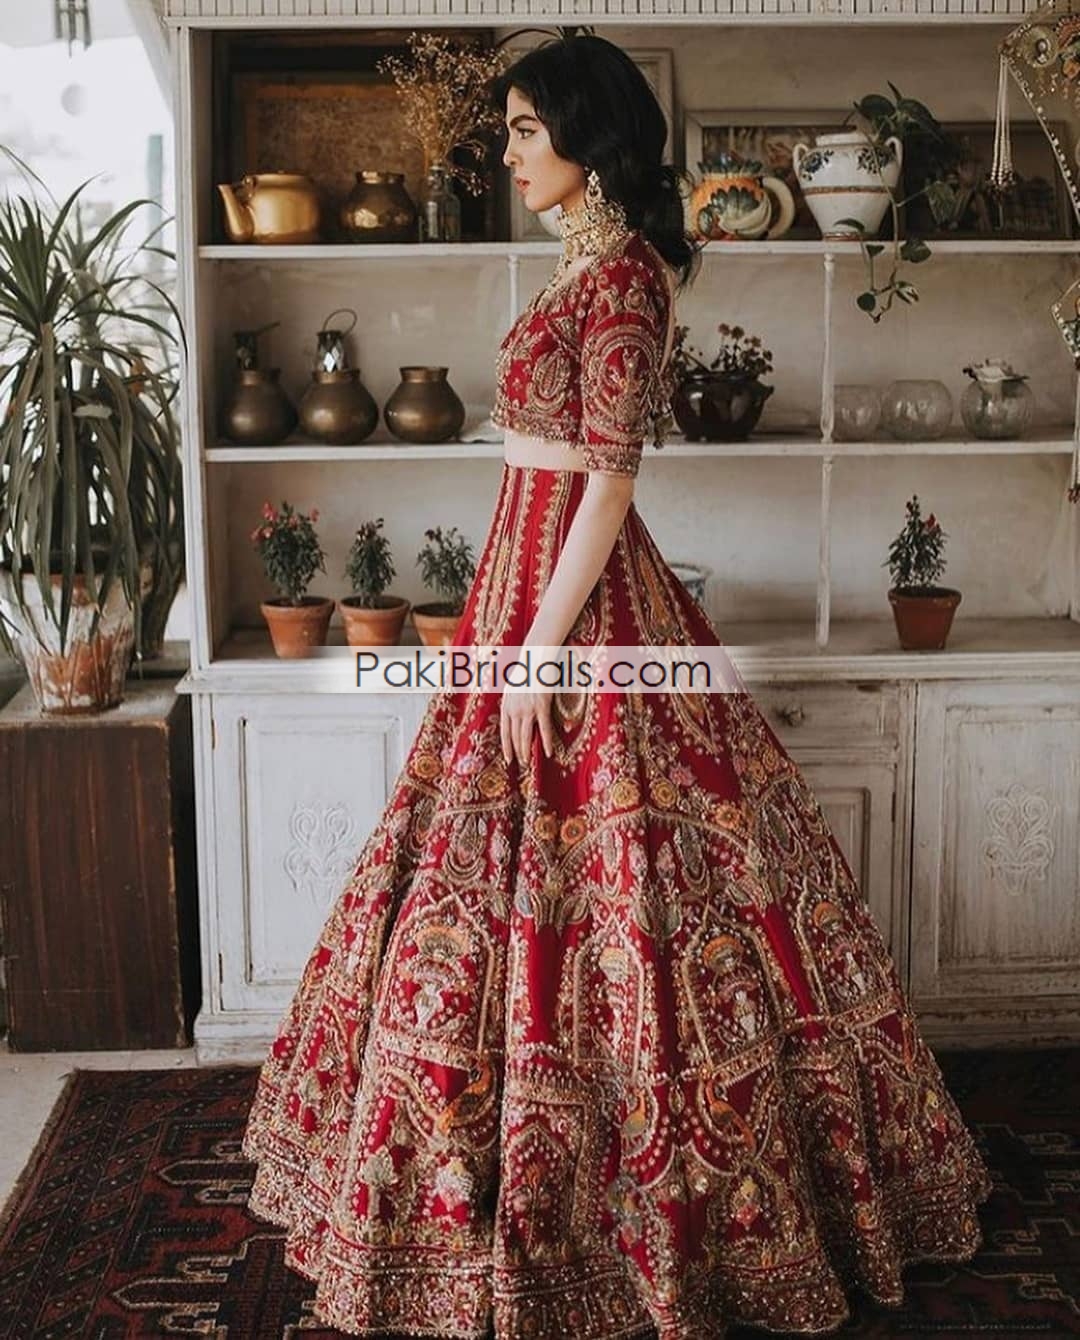 Grooms sister | Pakistani bridal dresses, Bridal dress design, Shadi dresses